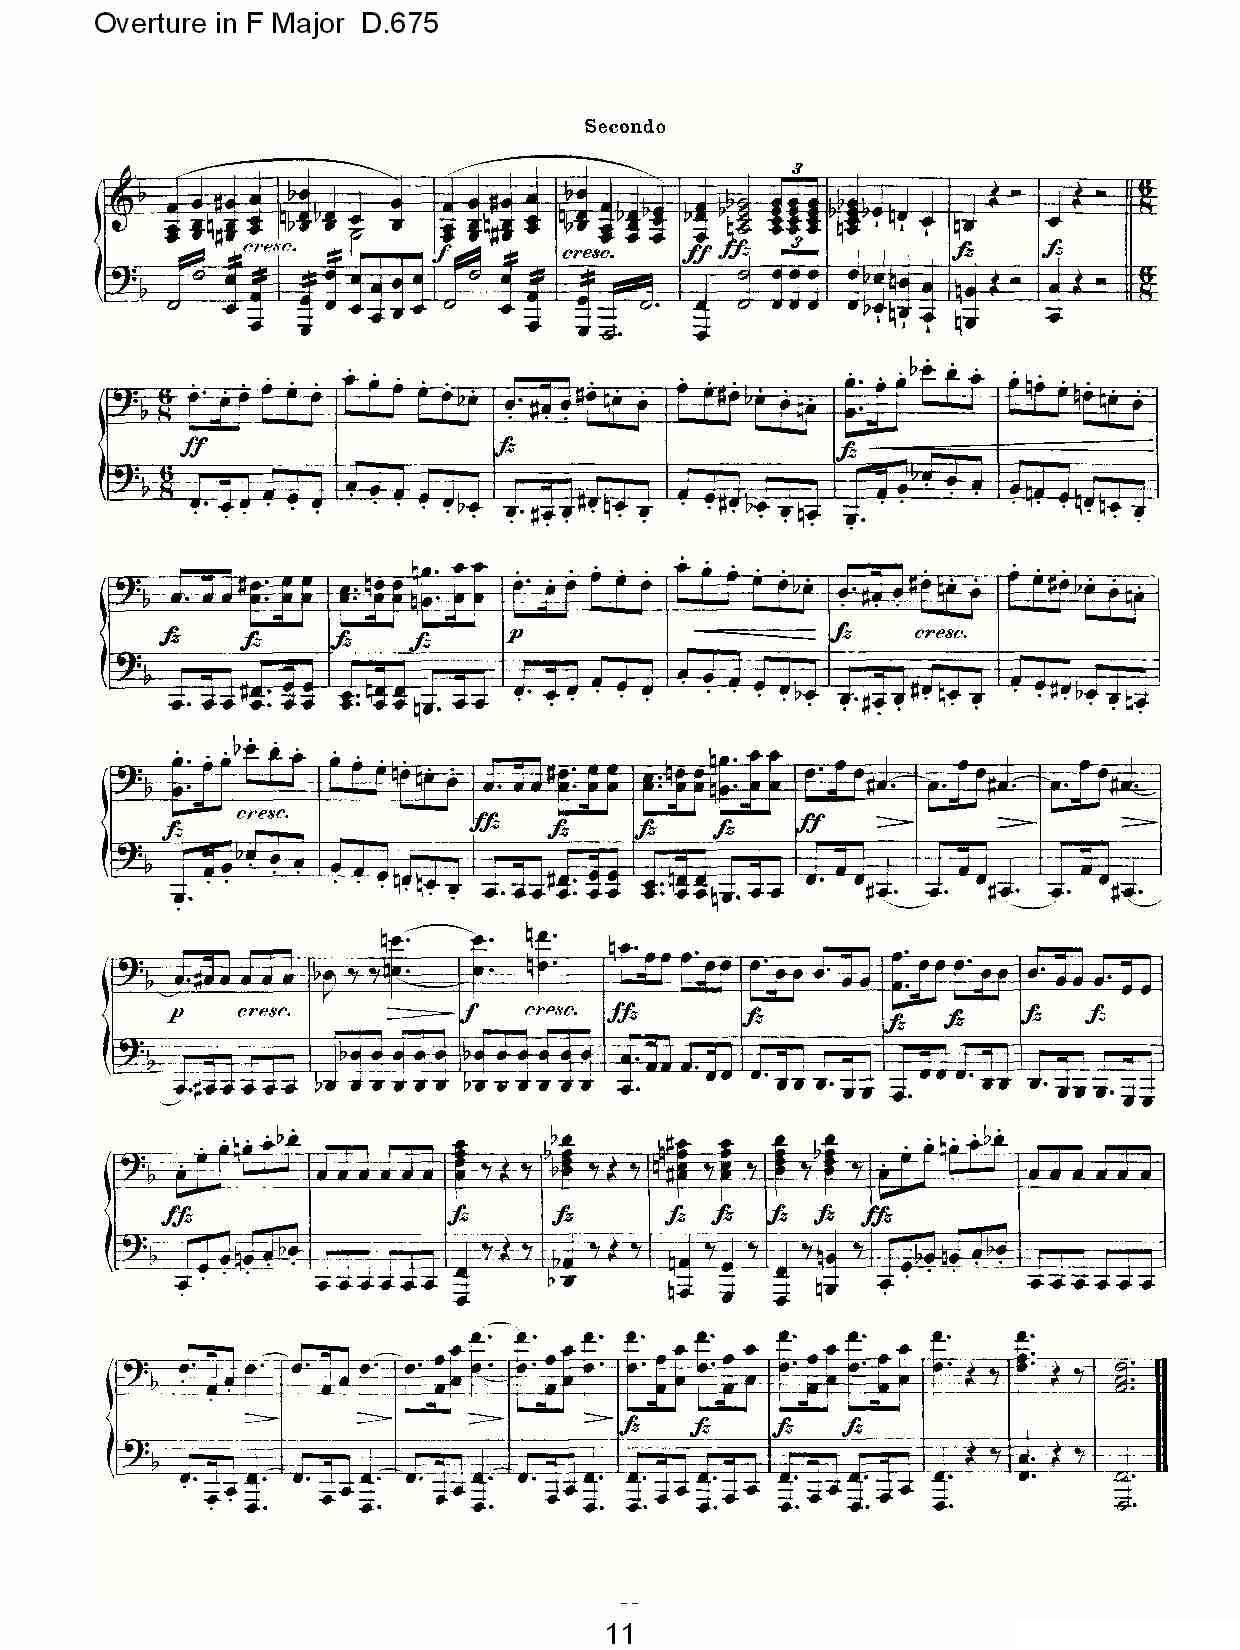 Overture in F Major D.675（Ｆ大调序曲 D.675）钢琴曲谱（图11）